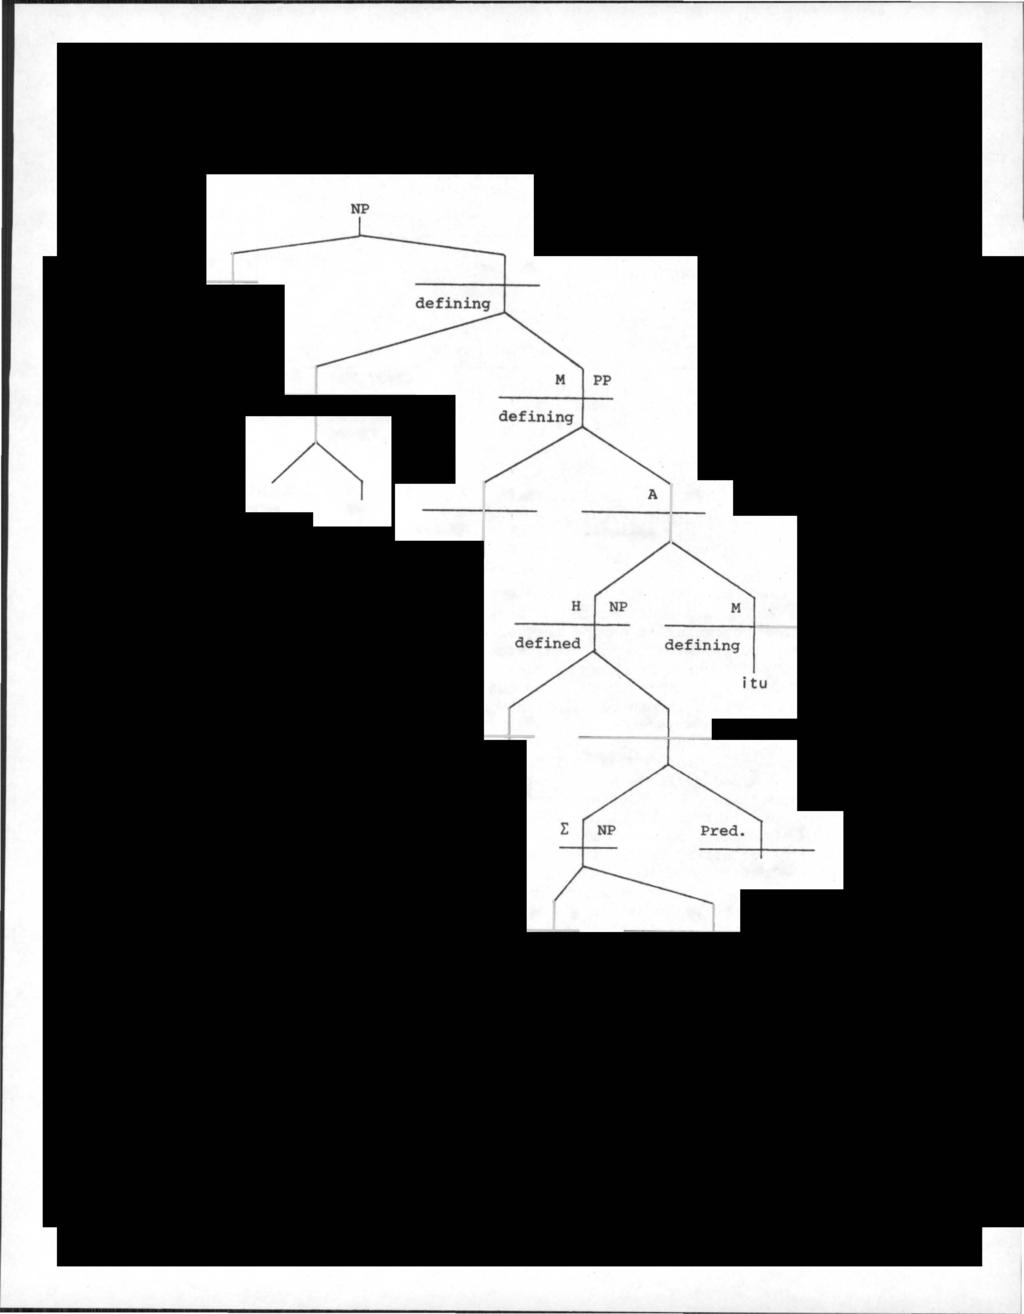 89 Display 3.6.12. Tree diagram (57a)... pangka lan yang ditempat pel anduk put ih lenyap itu NP TH N M NP defined loco pangka lan H Rel. Pron.